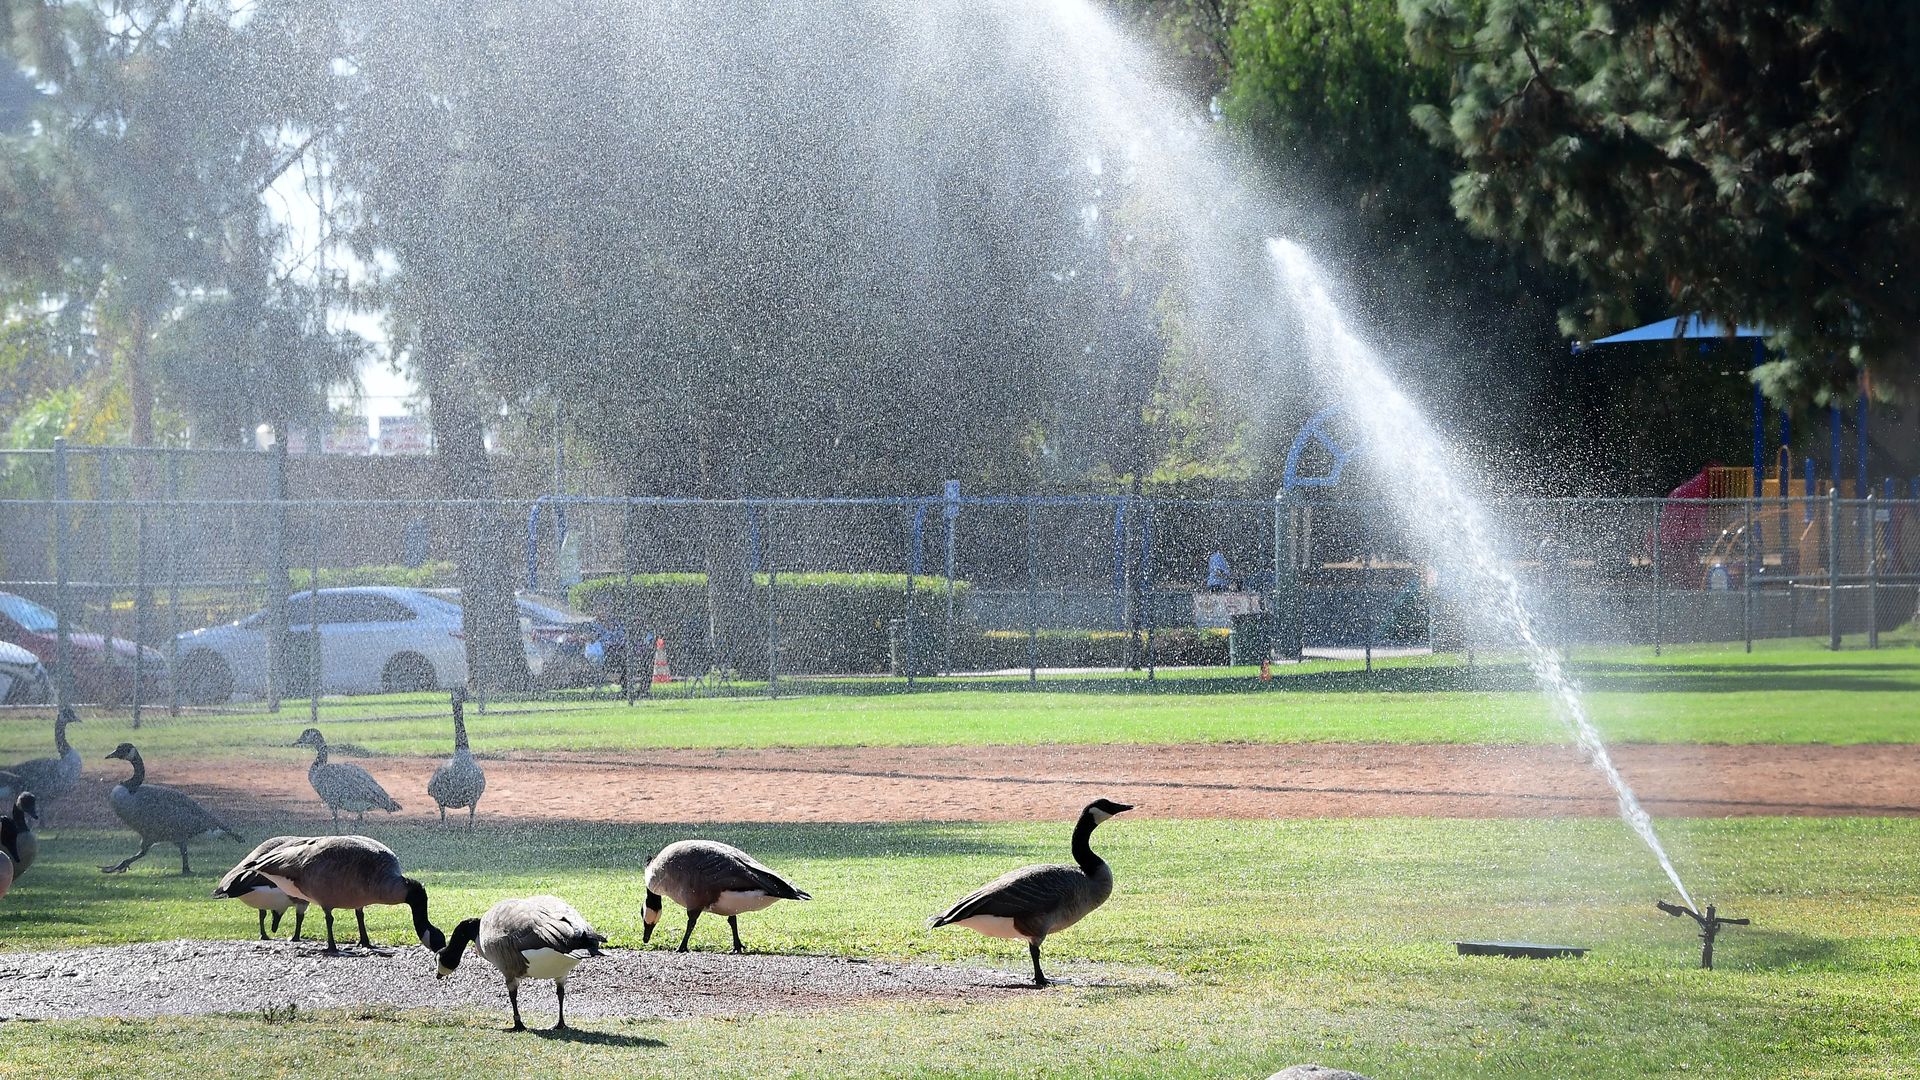  Ducks roam the infield as a sprinkler waters a baseball field in Alhambra, California on September 23.